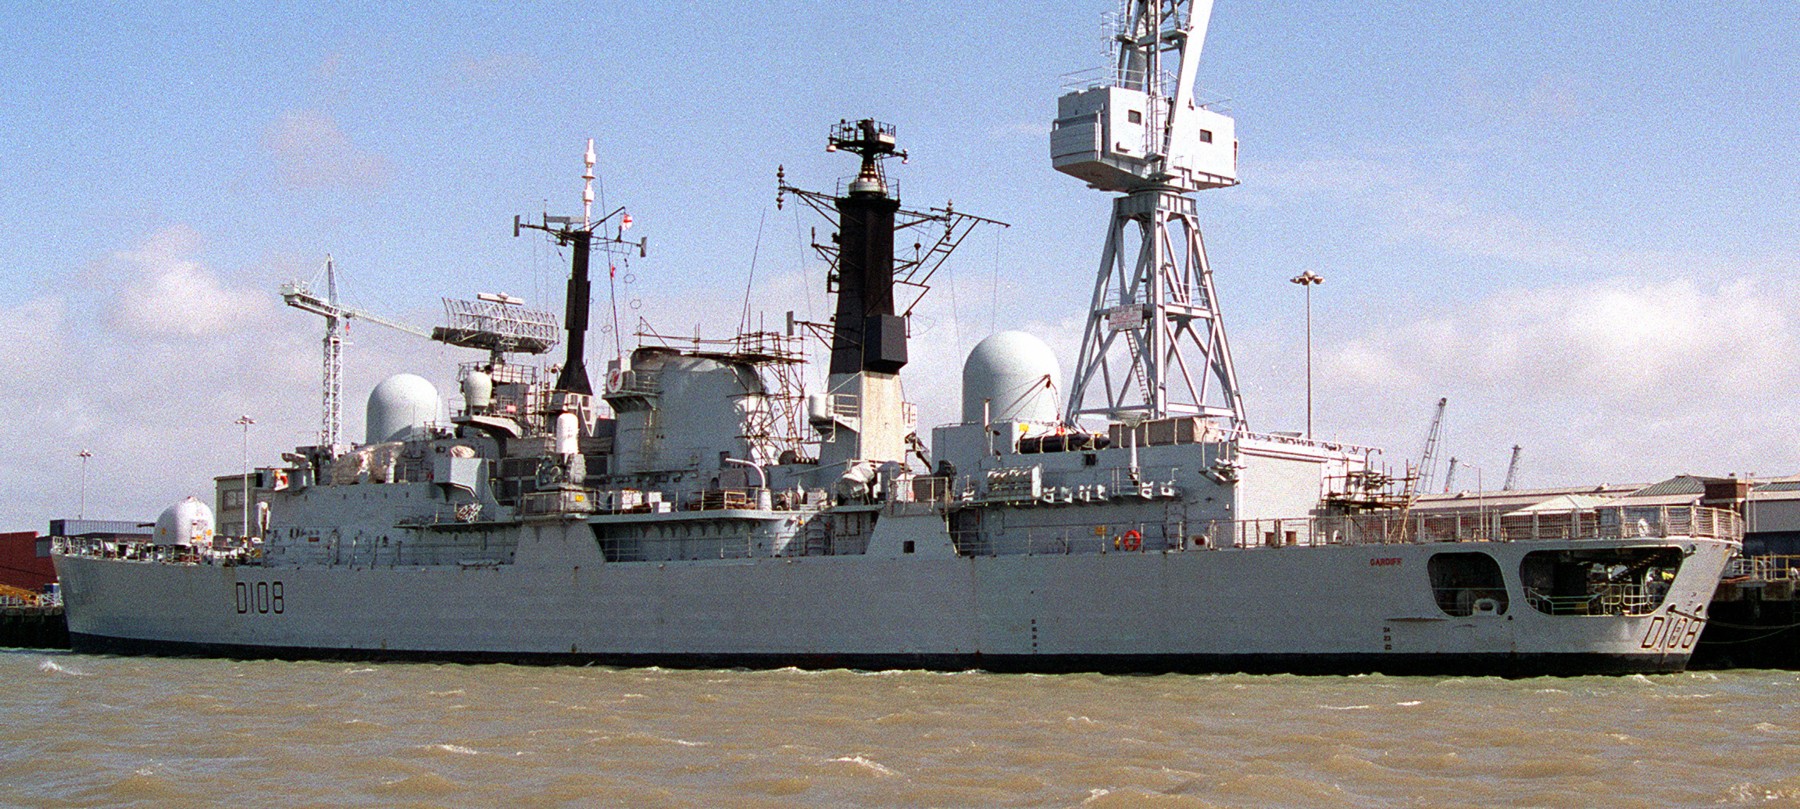 hms cardiff d108 destroyer royal navy